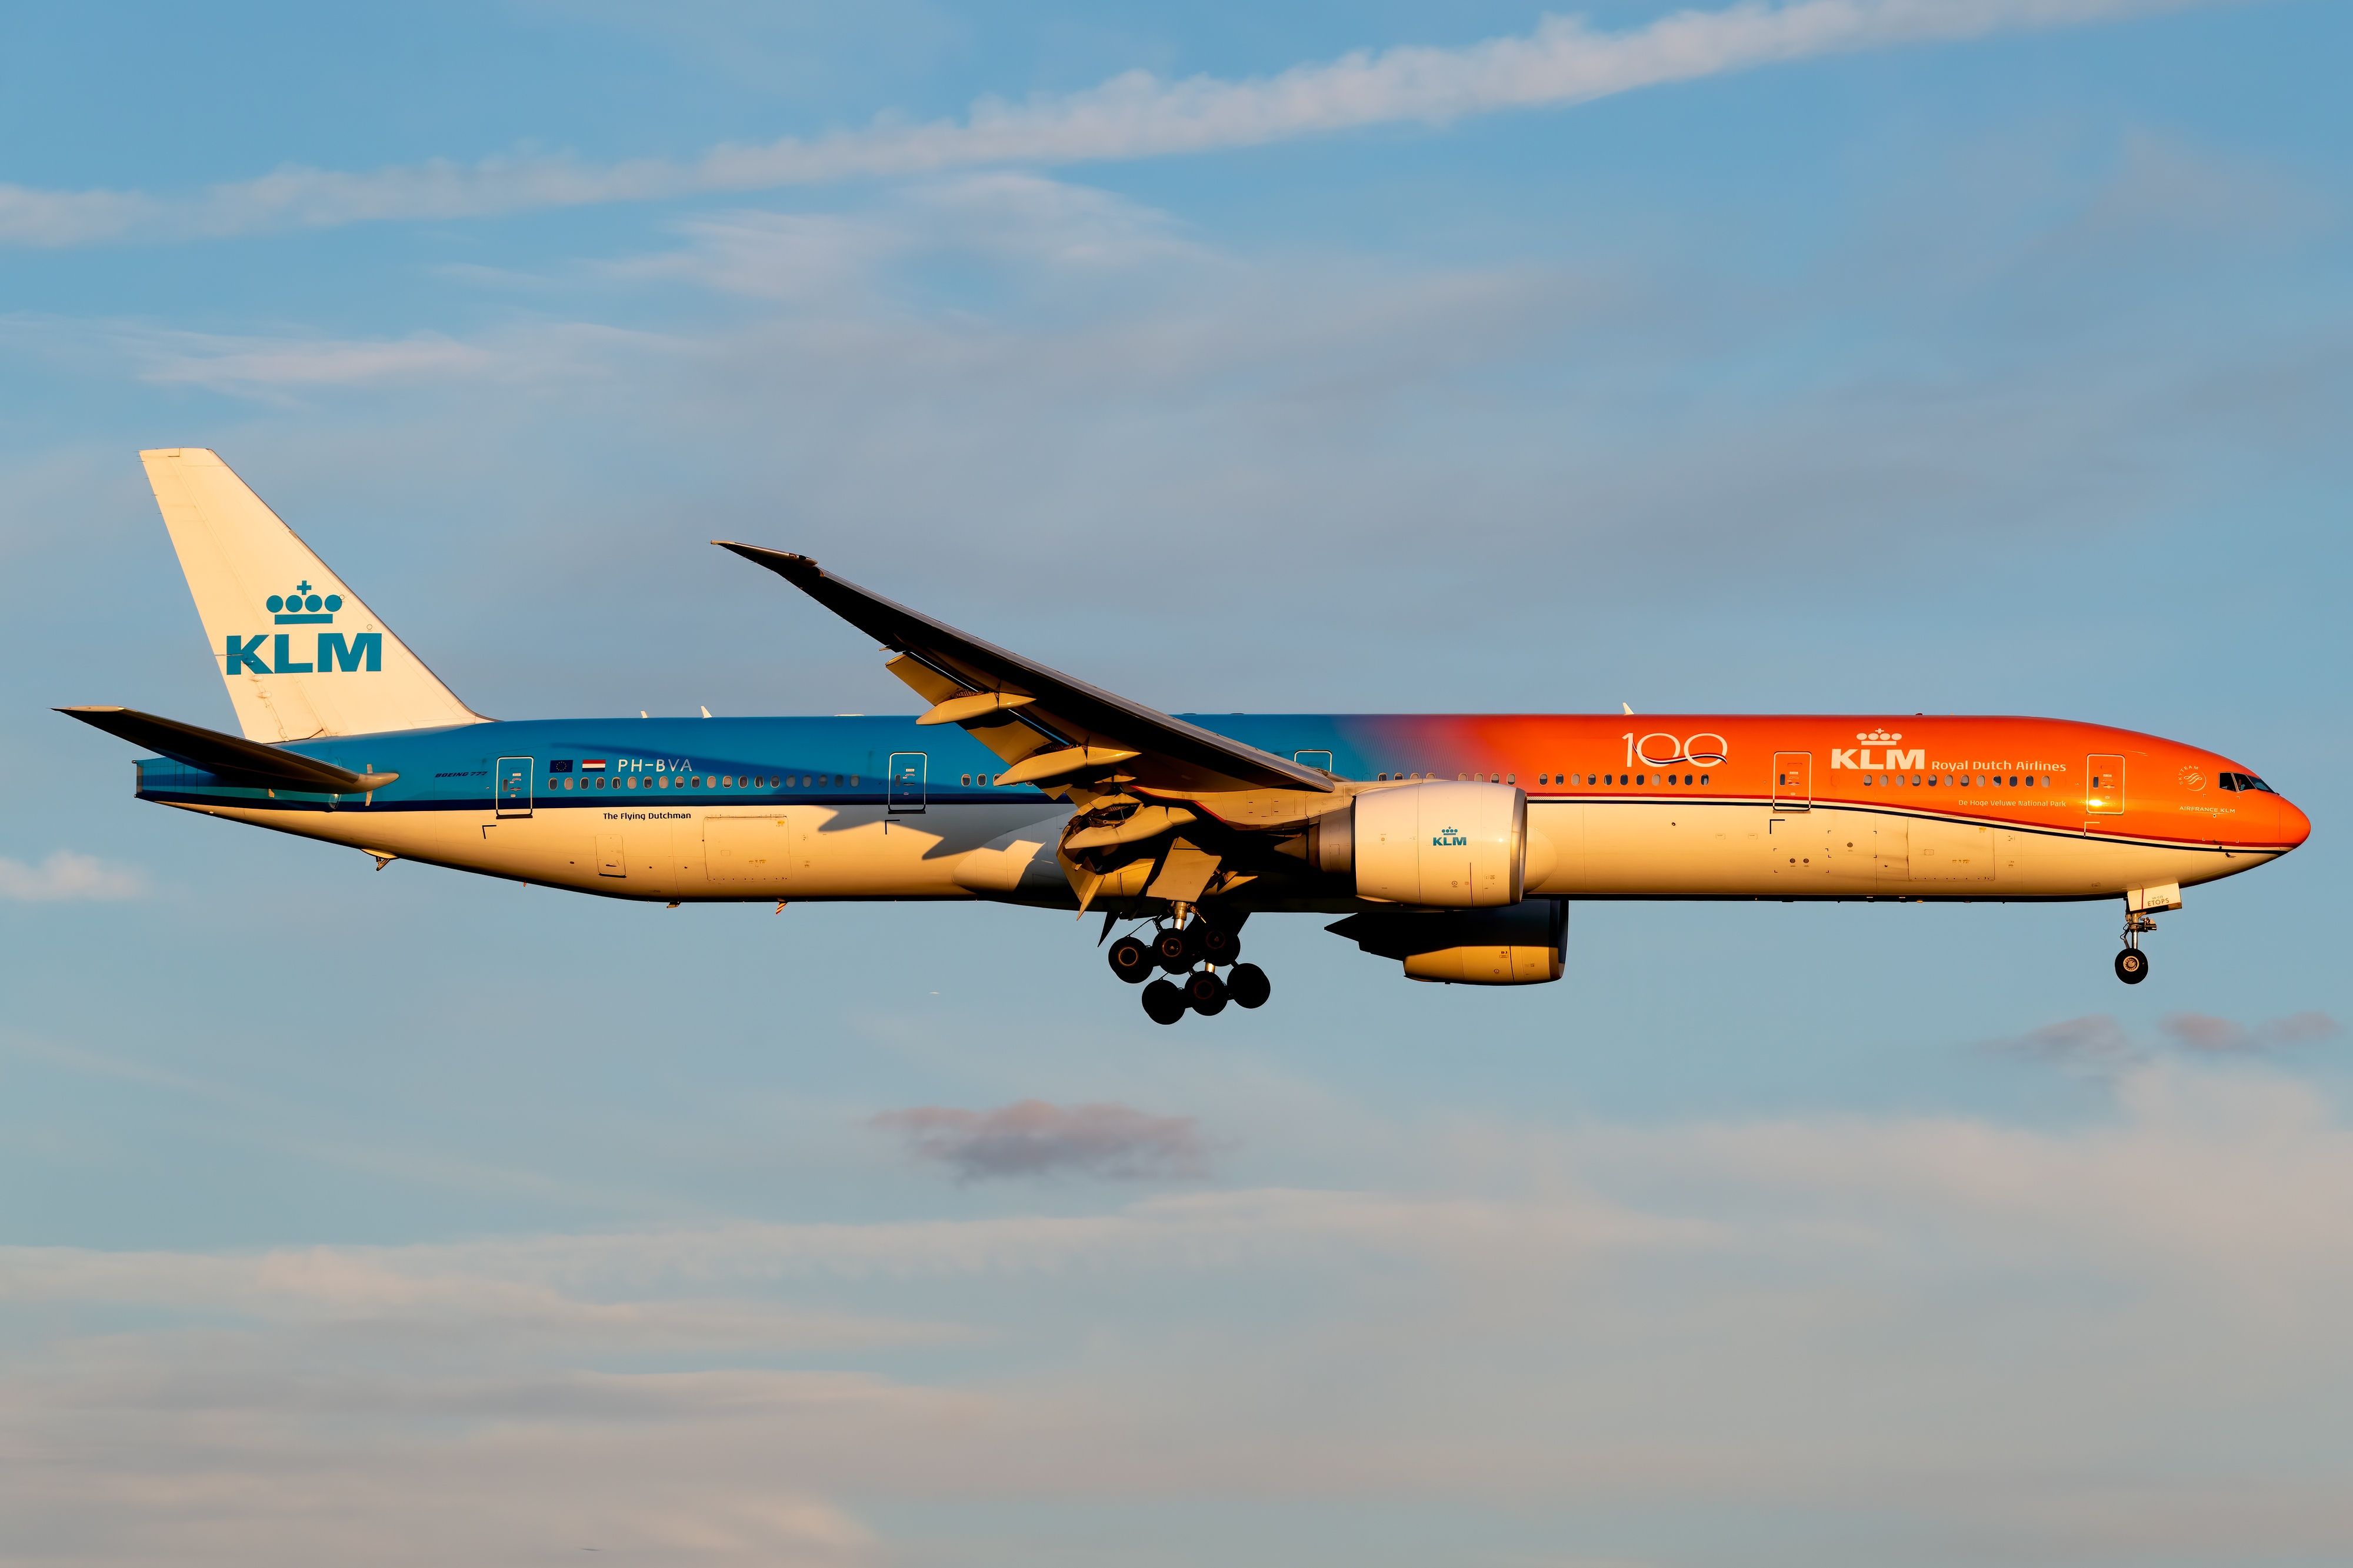 KLM Boeing 777-300ER landing with the Orange Pride Livery.